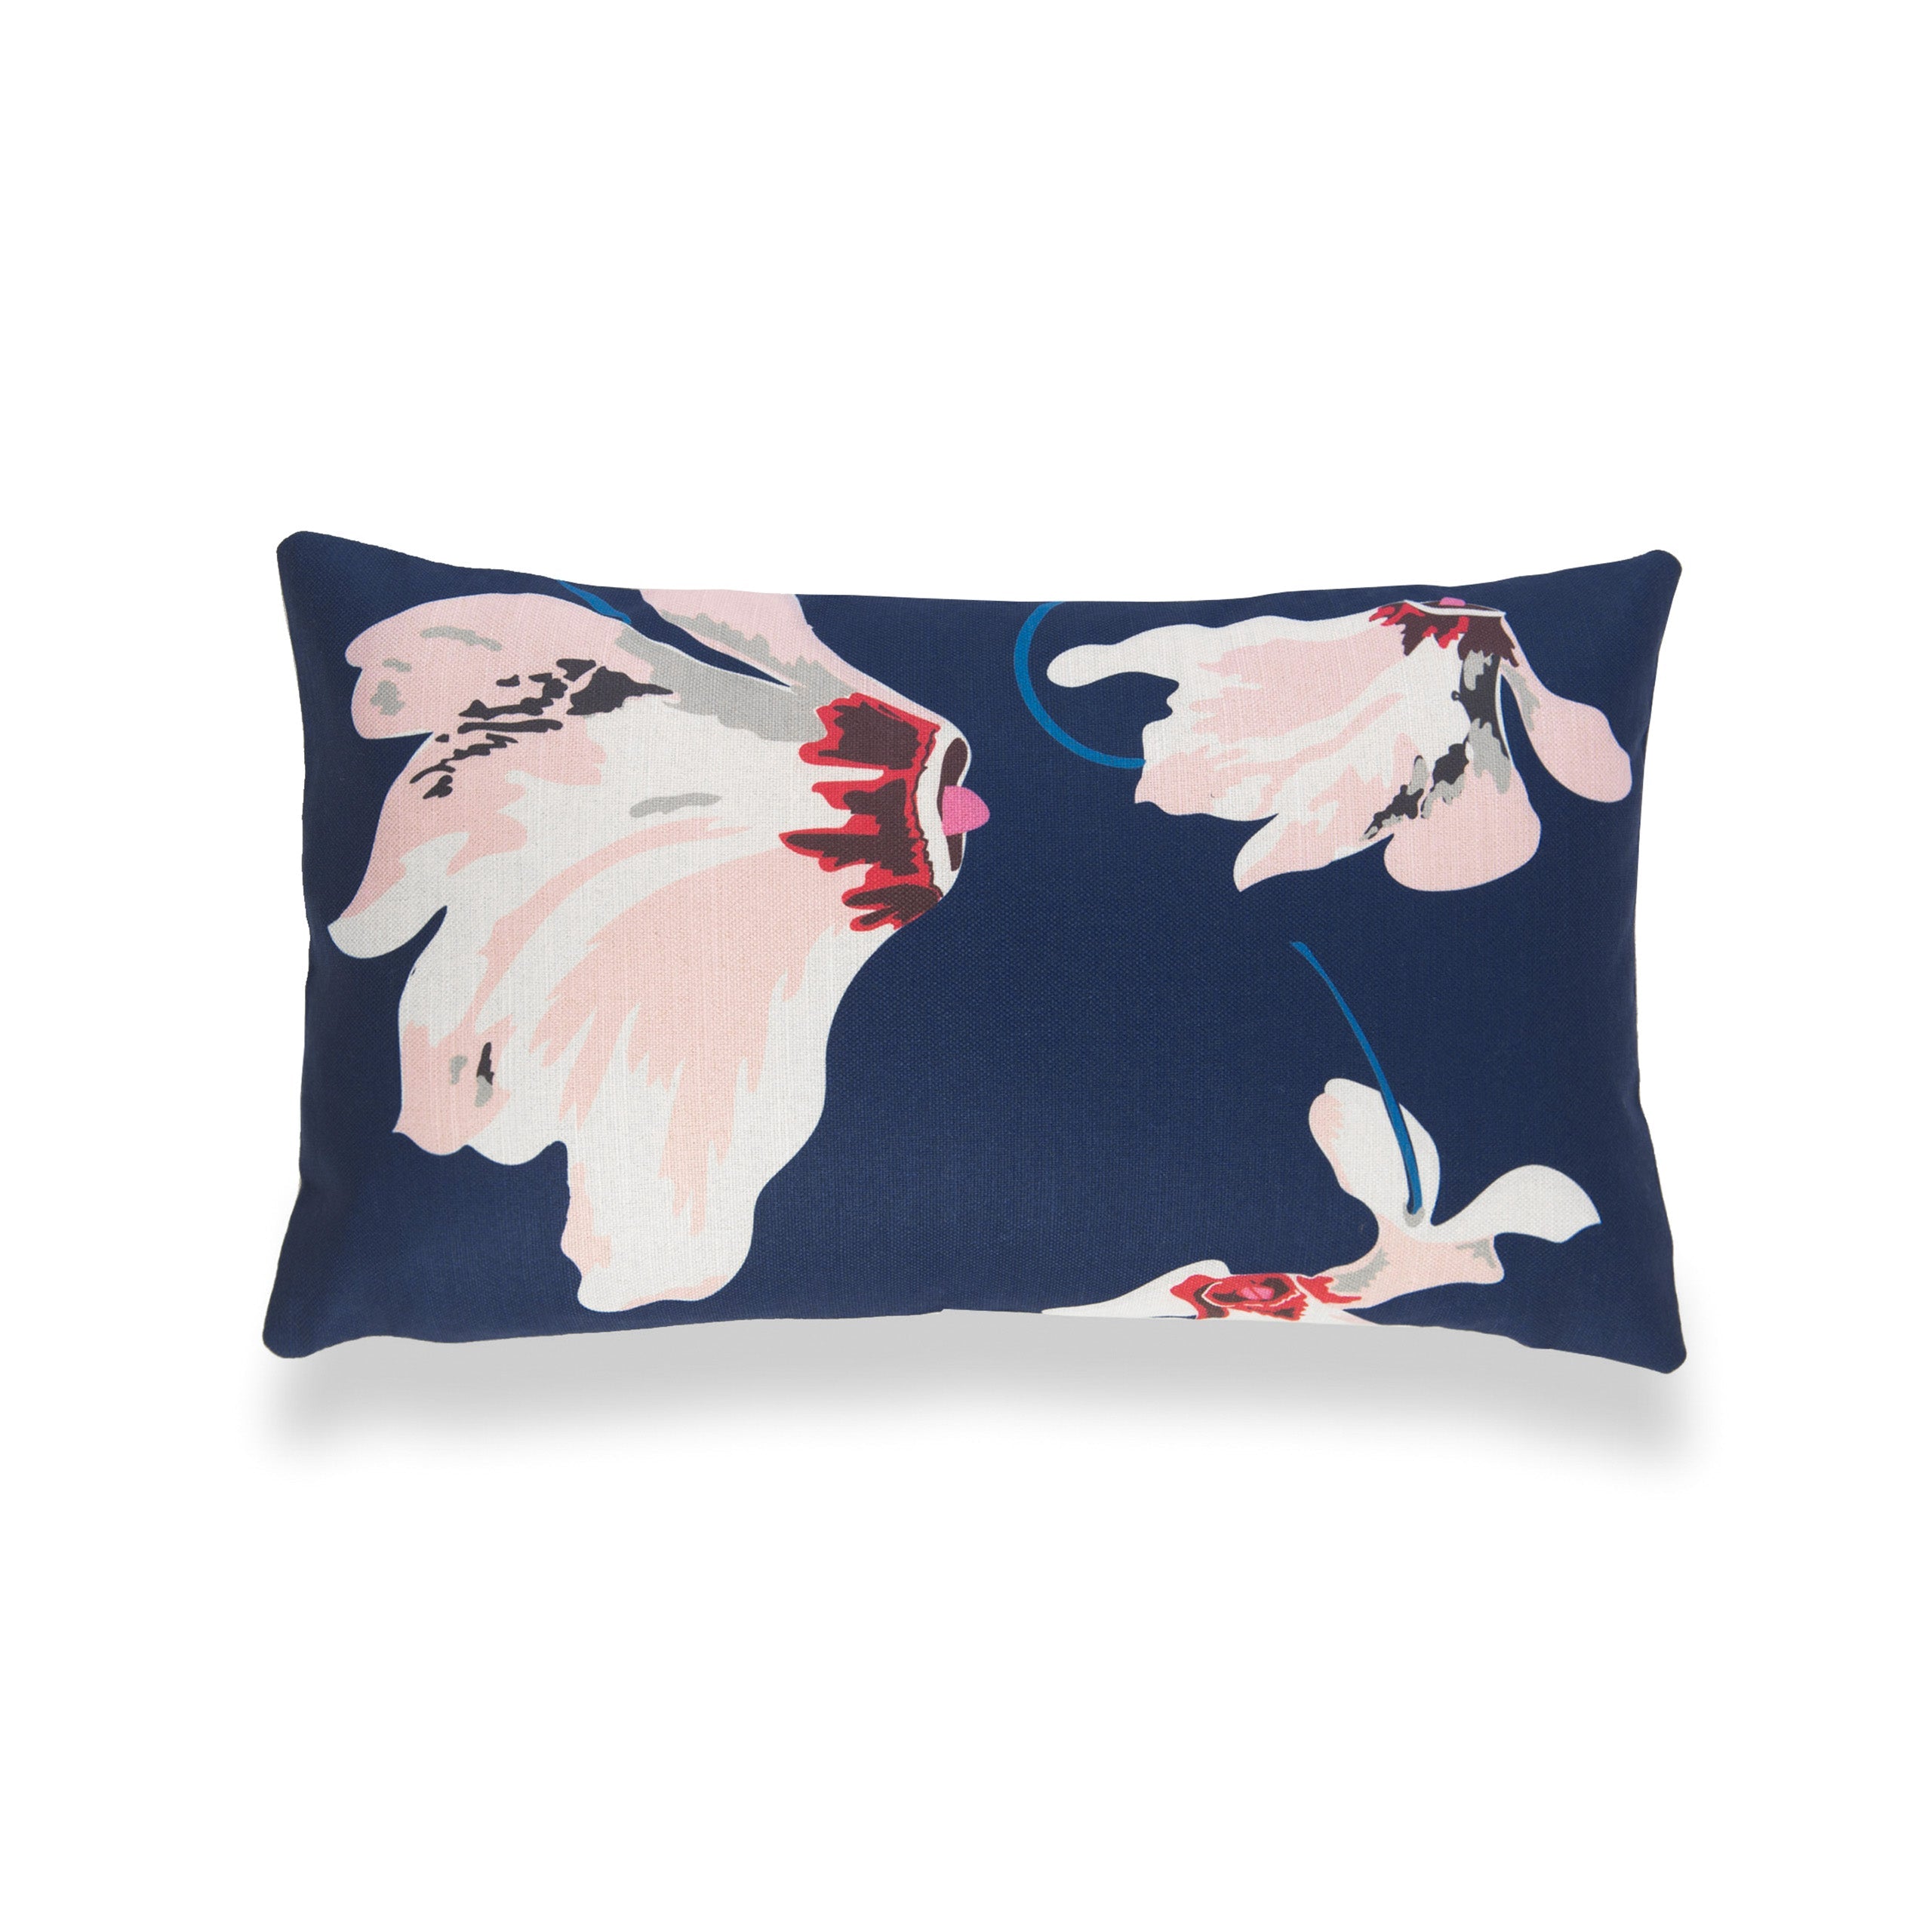 Spring Indoor Outdoor Lumbar Pillow Cover, Floral, Navy Blue Pink, 12"x20"